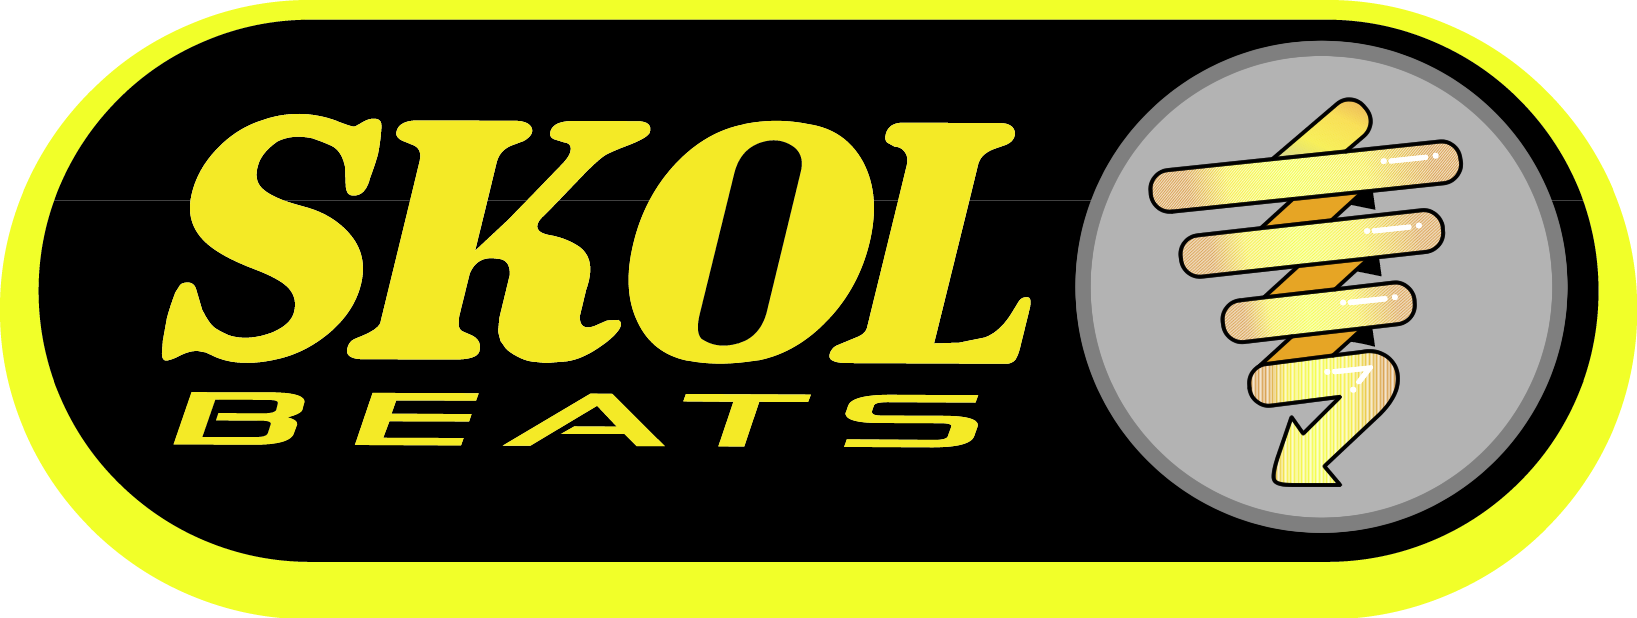 Skol Beats Free Vector - Beats Electronics Vector, Transparent background PNG HD thumbnail